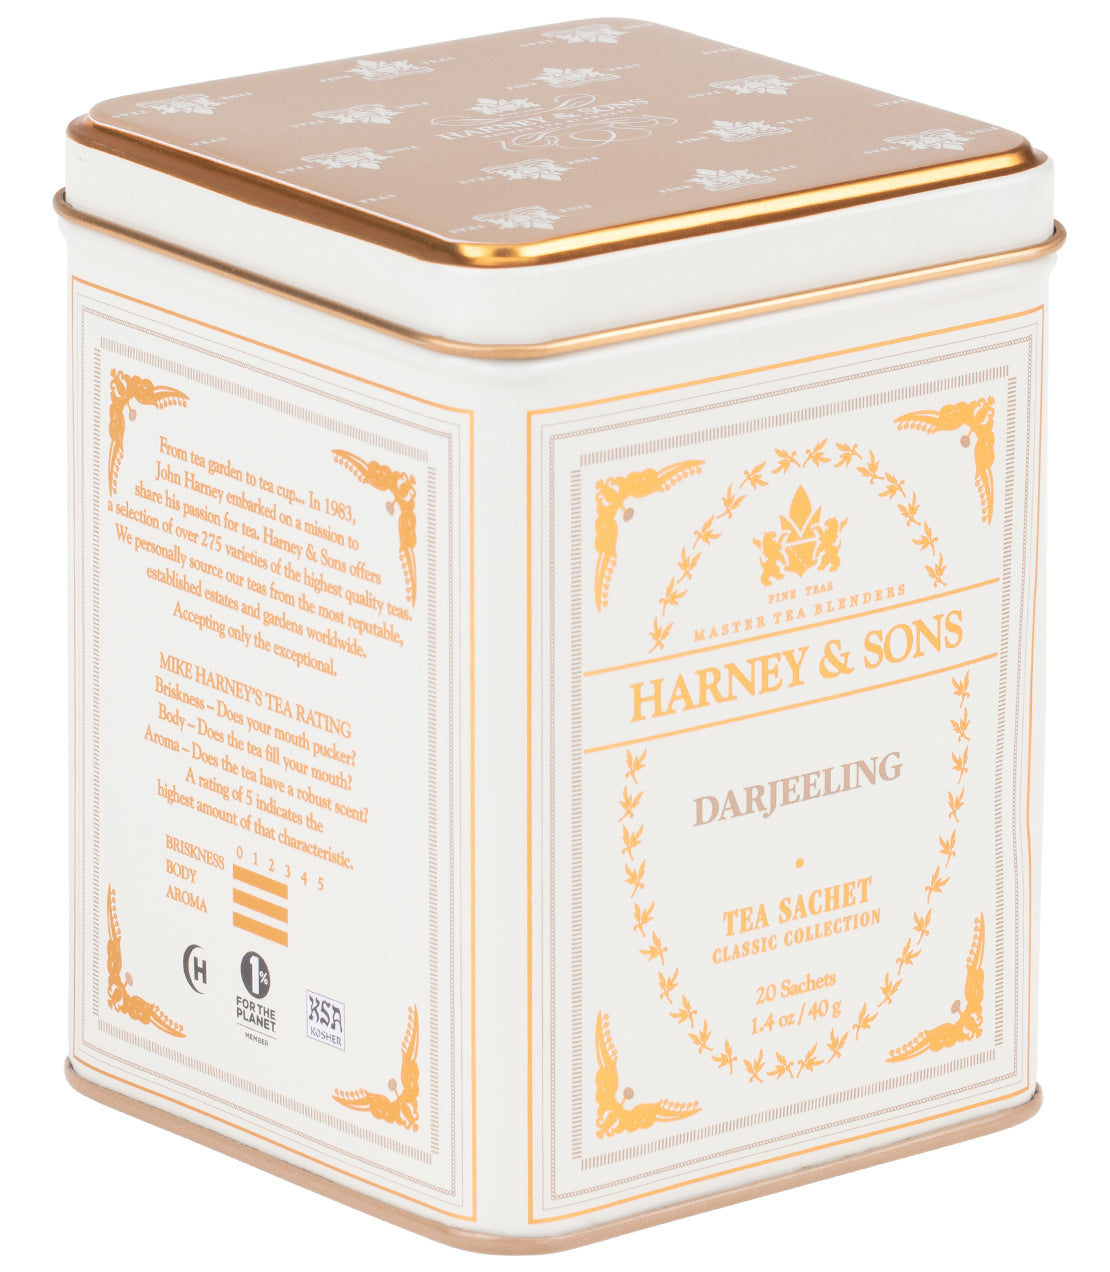 Darjeeling - Sachets Classic Tin of 20 Sachets - Harney & Sons Fine Teas